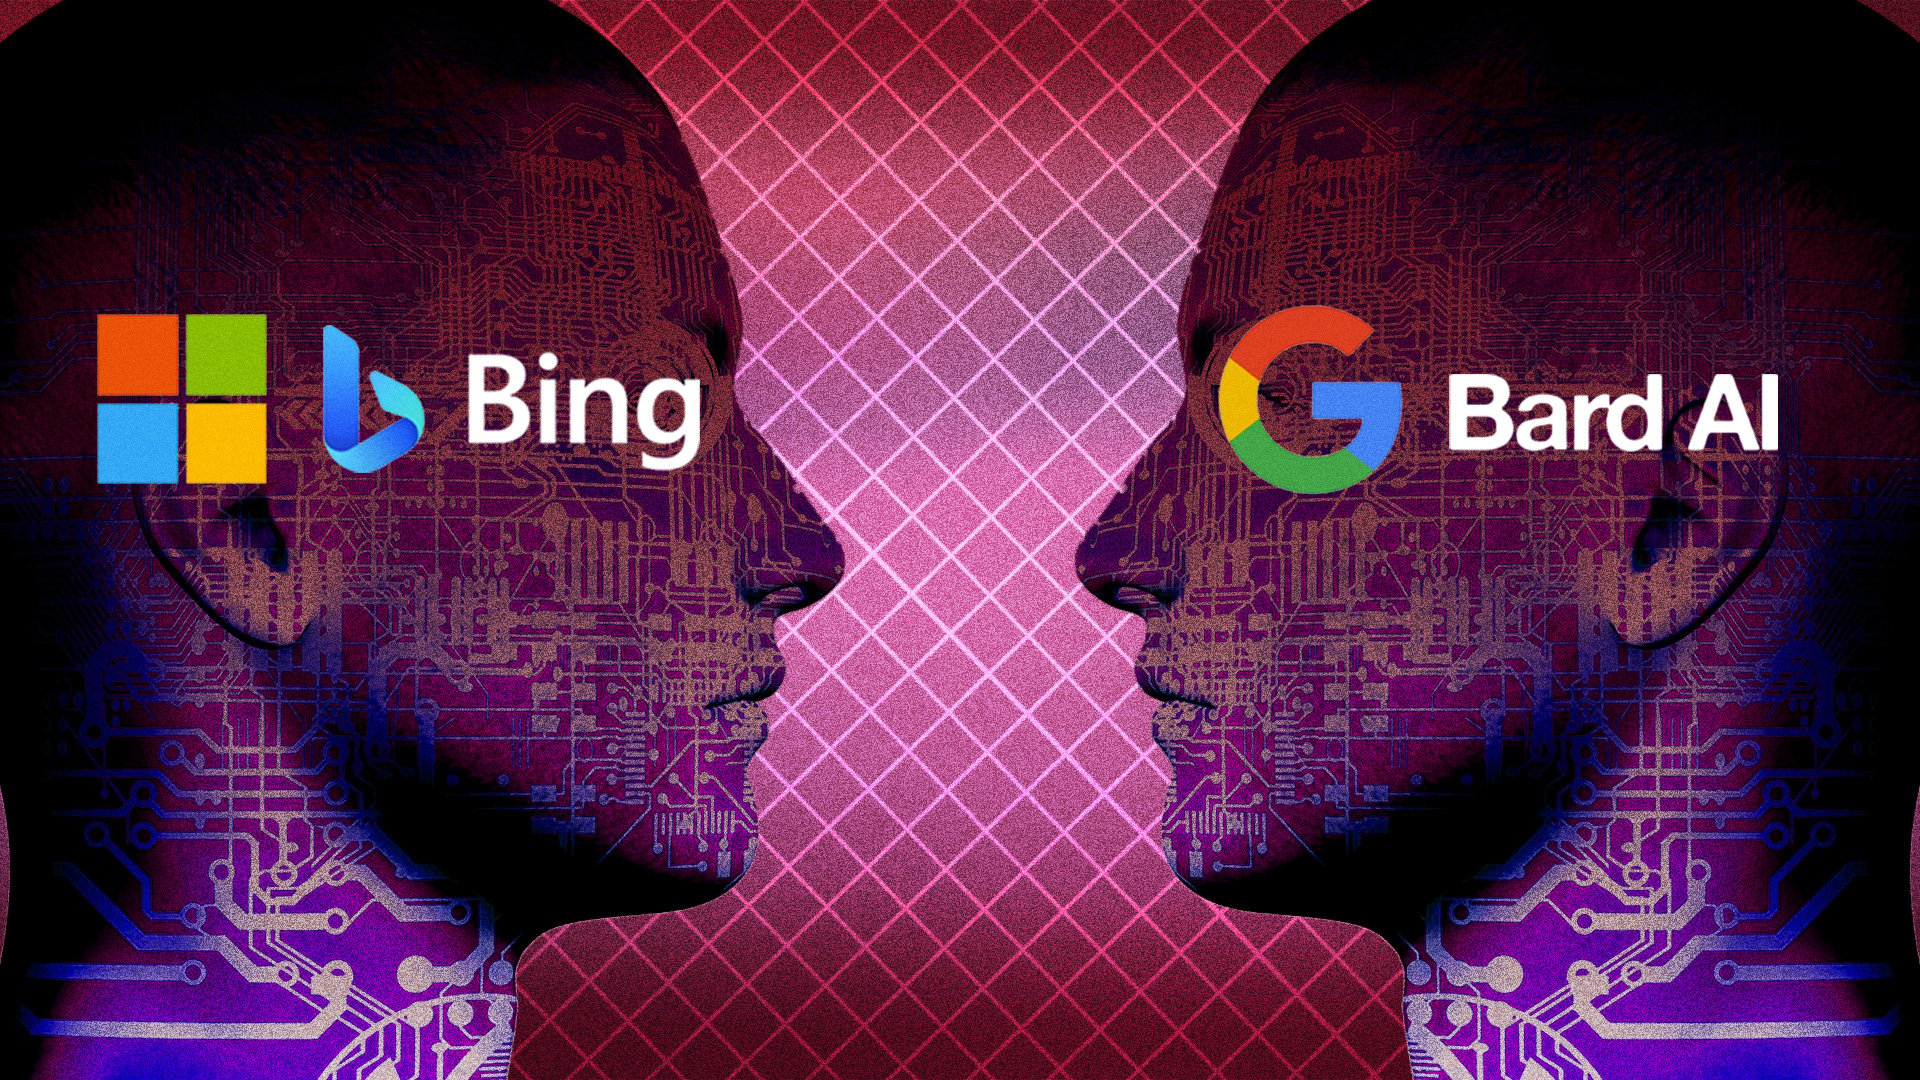 Google Bard vs Microsoft Bing Chat: A Battle of AI Brilliance